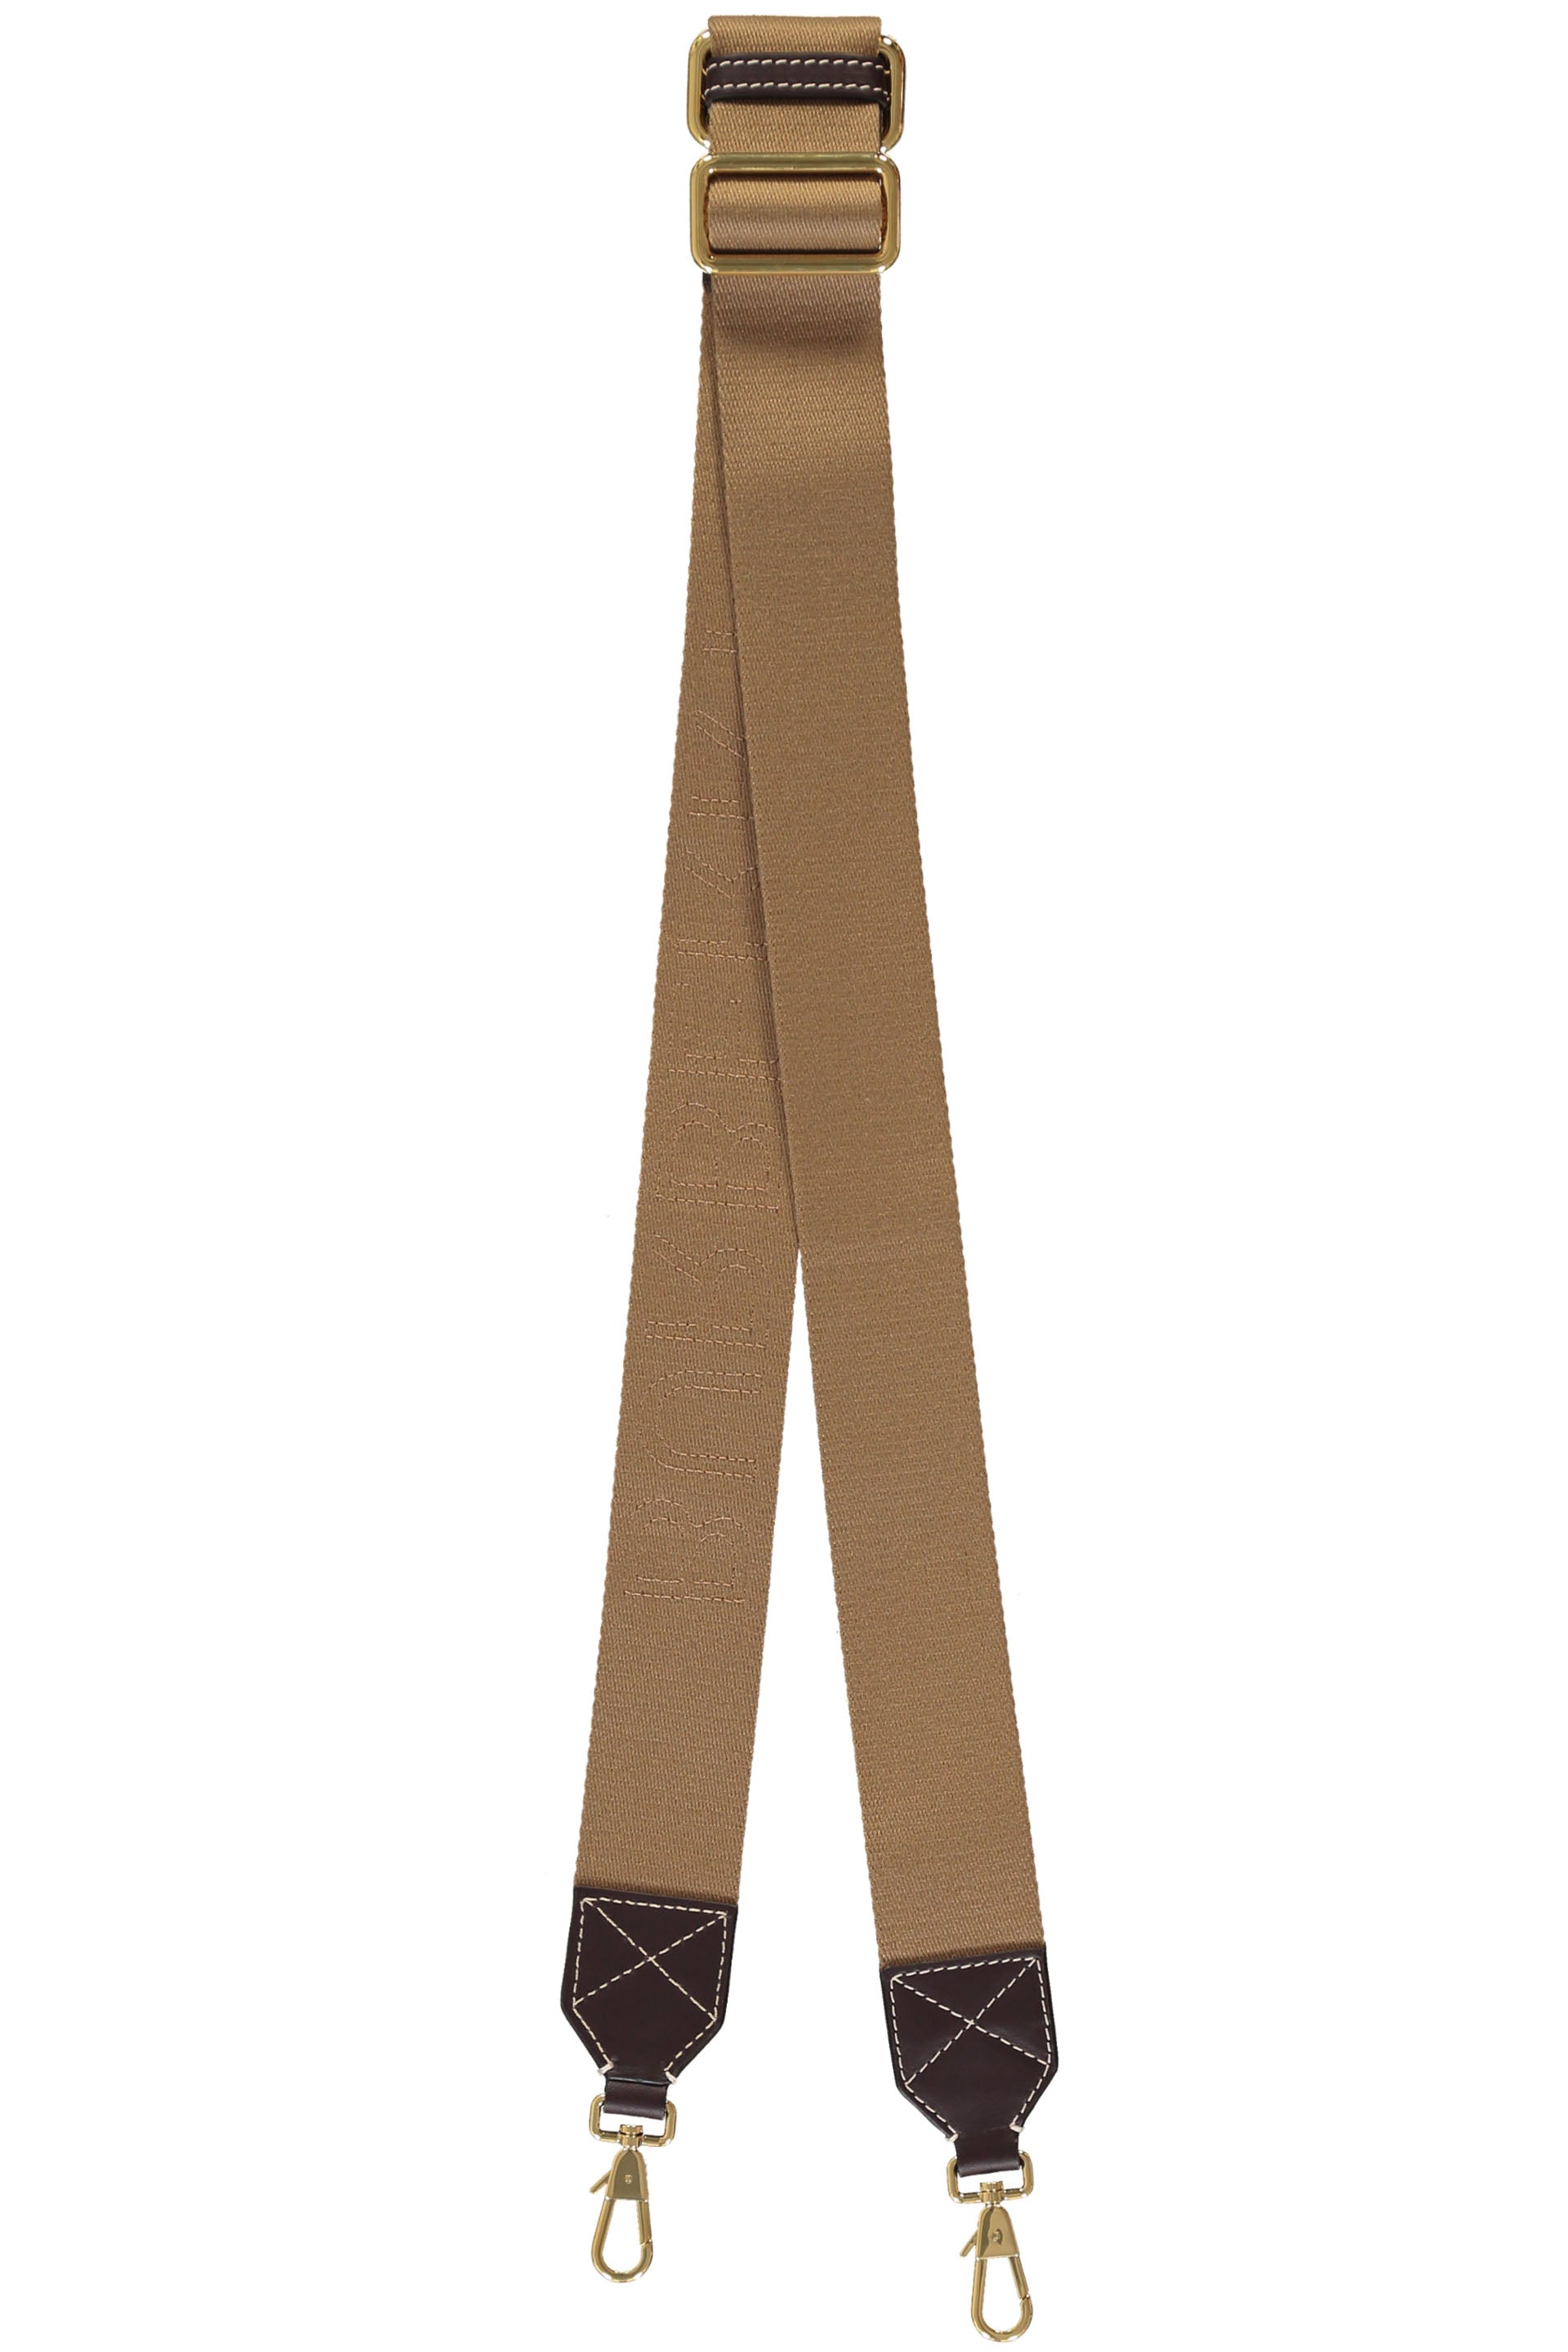 Adjustable and removable fabric shoulder strap